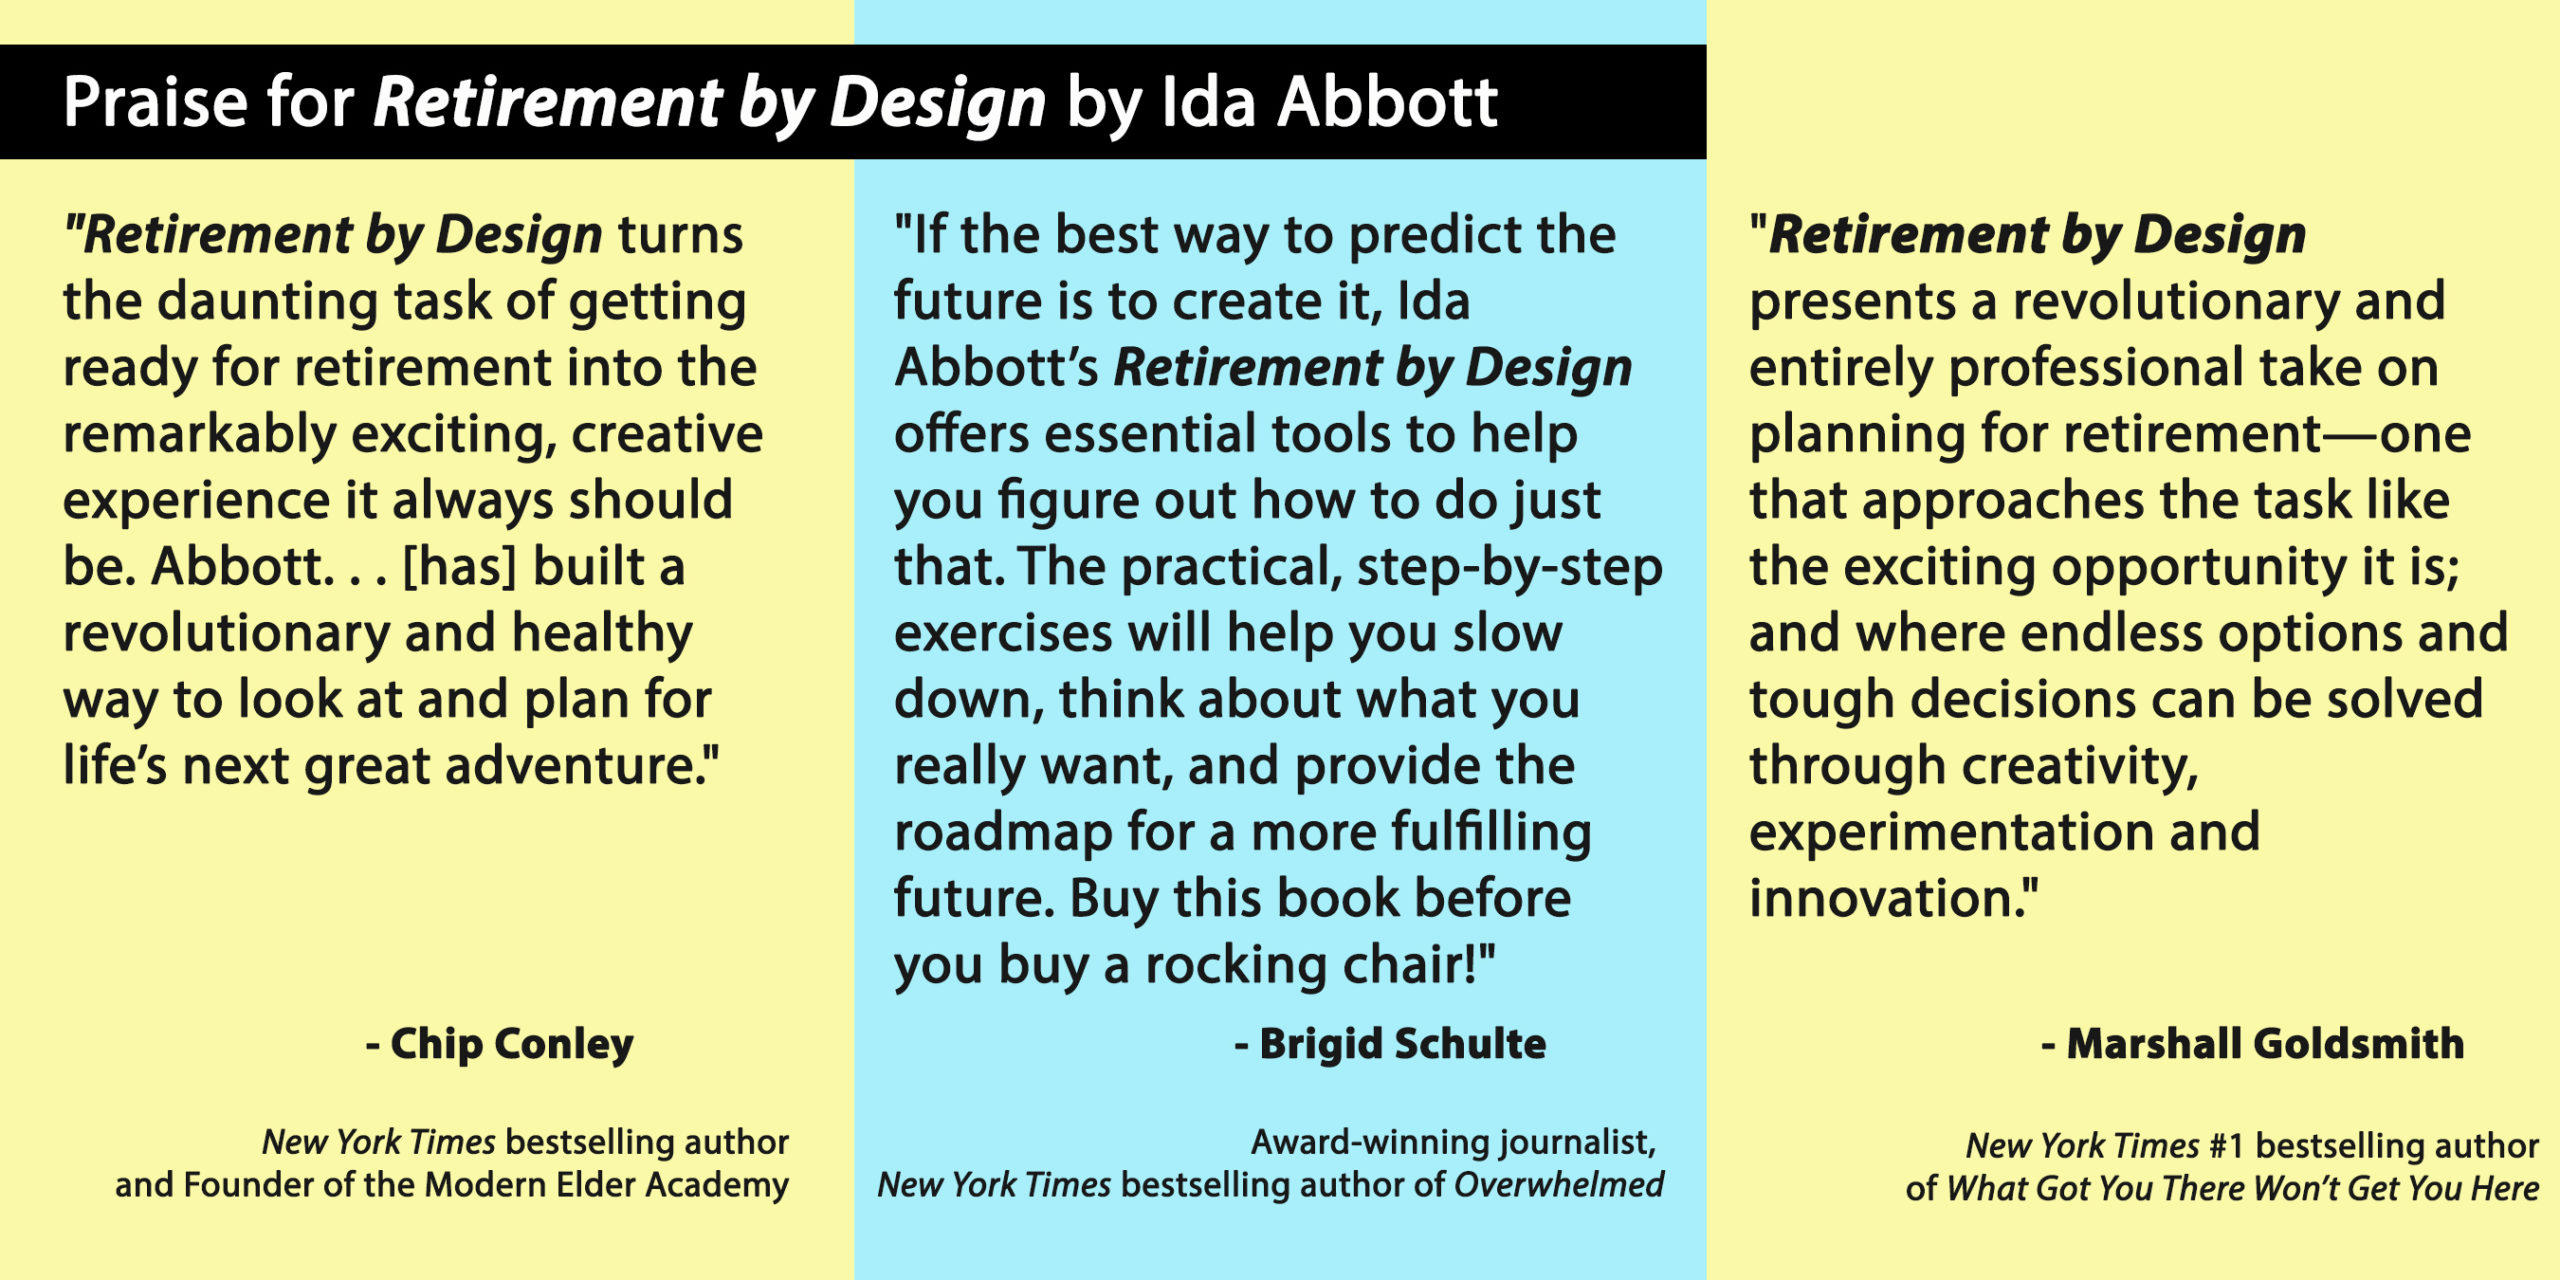 Praise for Retirement by Design by Ida Abbott